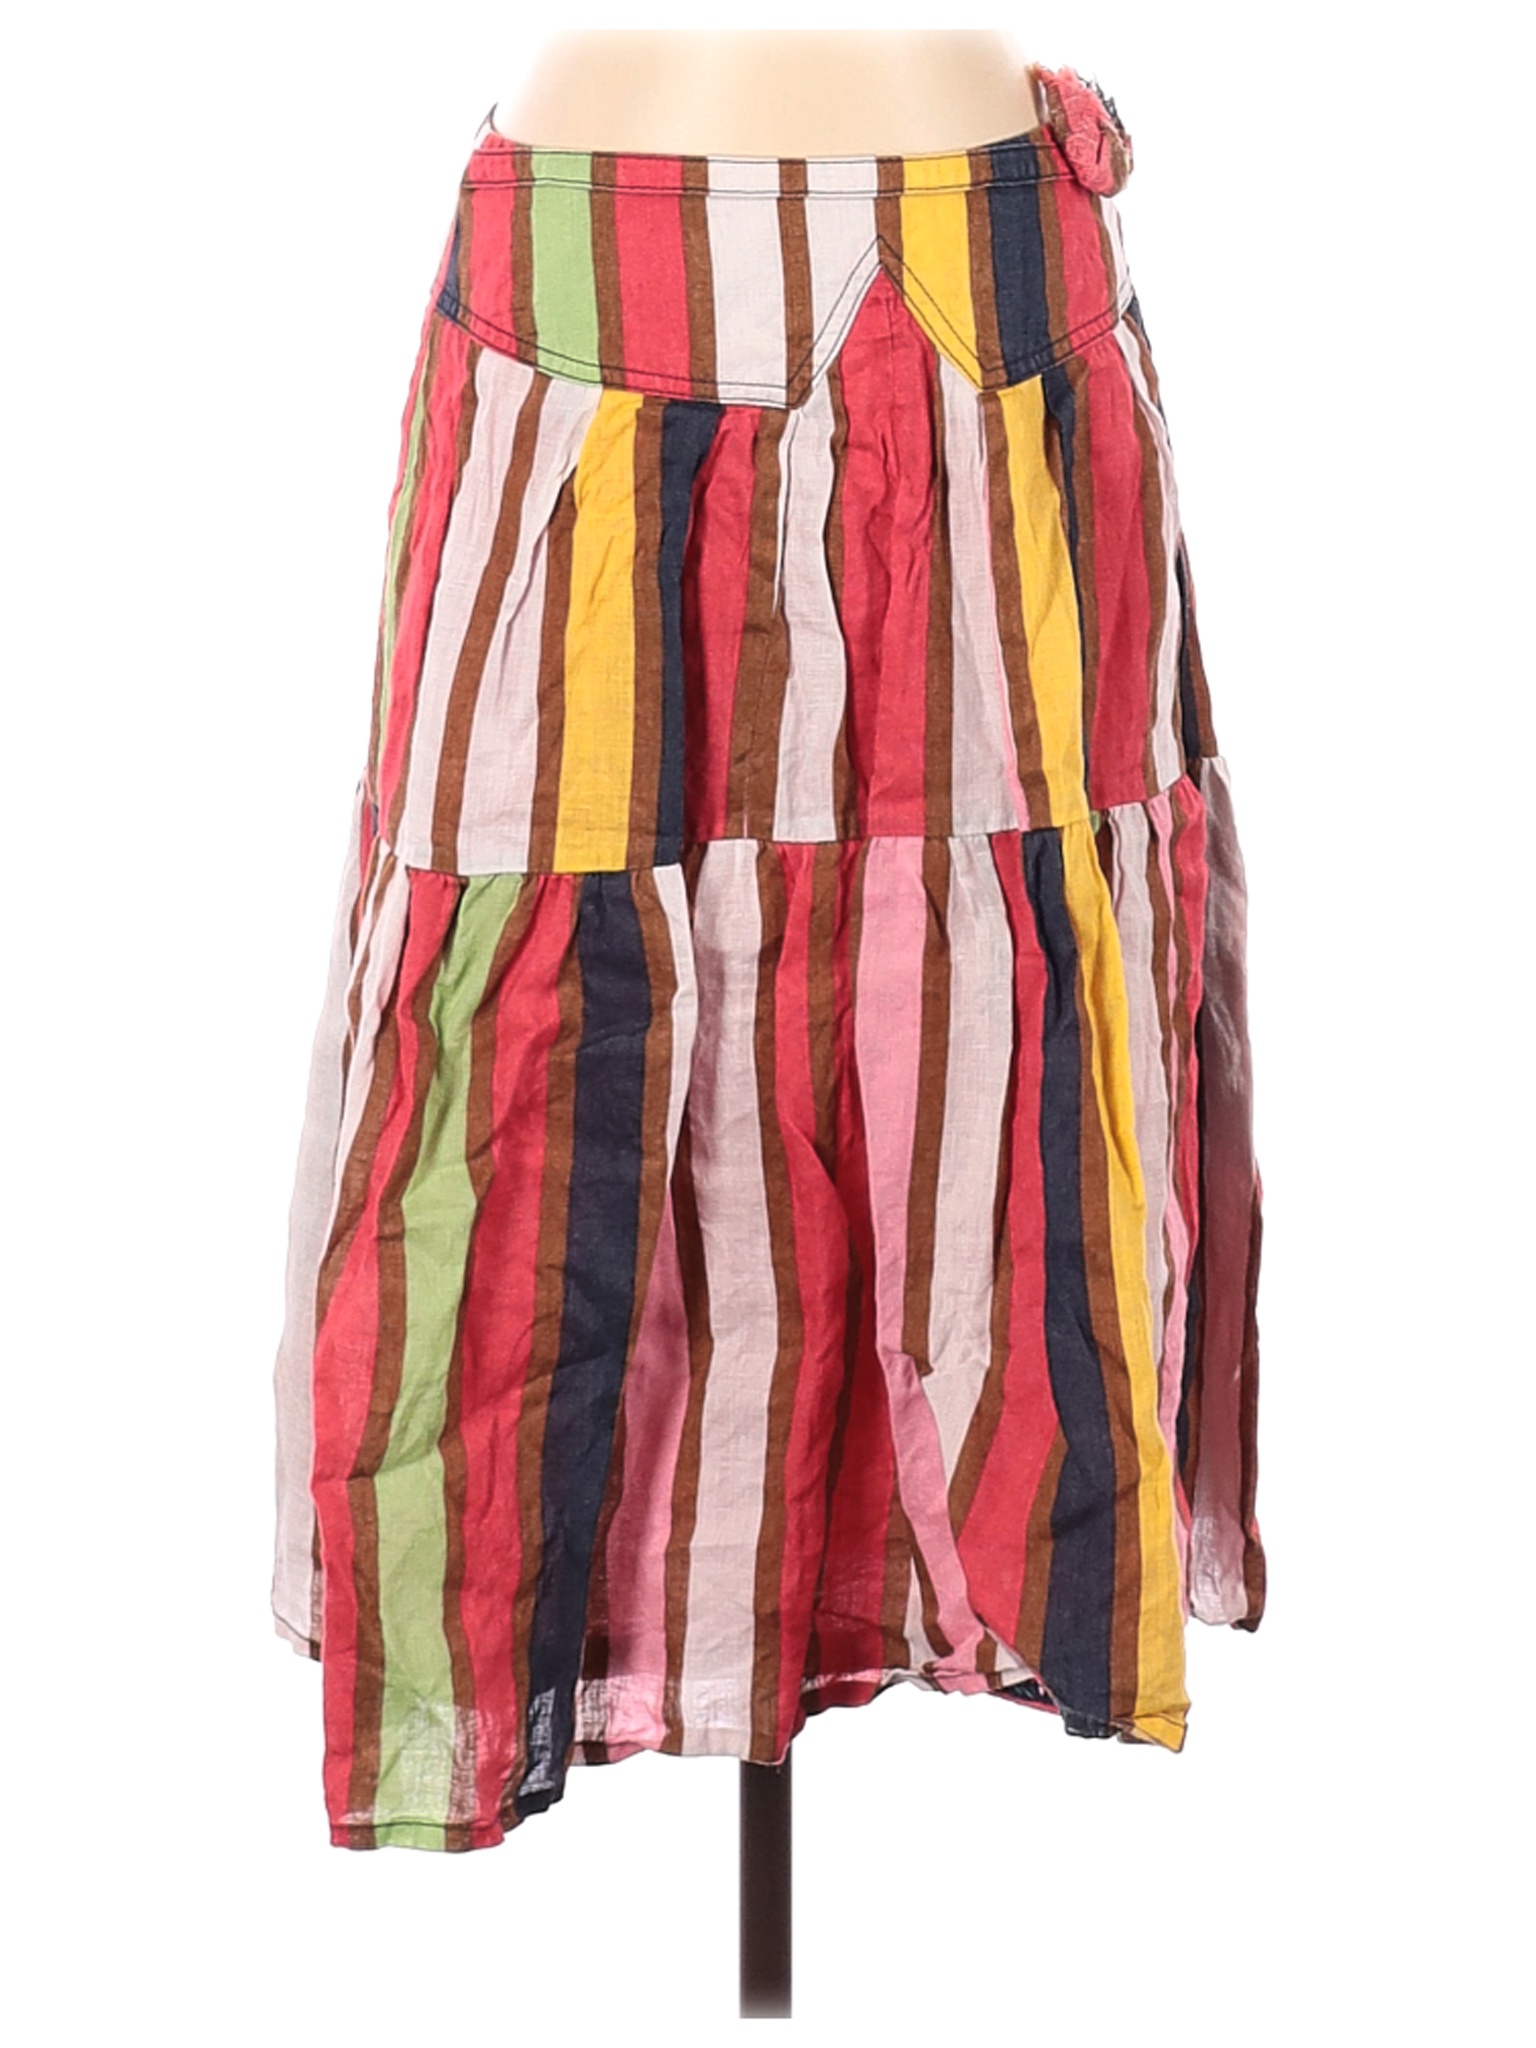 Oilily Women Red Casual Skirt 34 eur | eBay